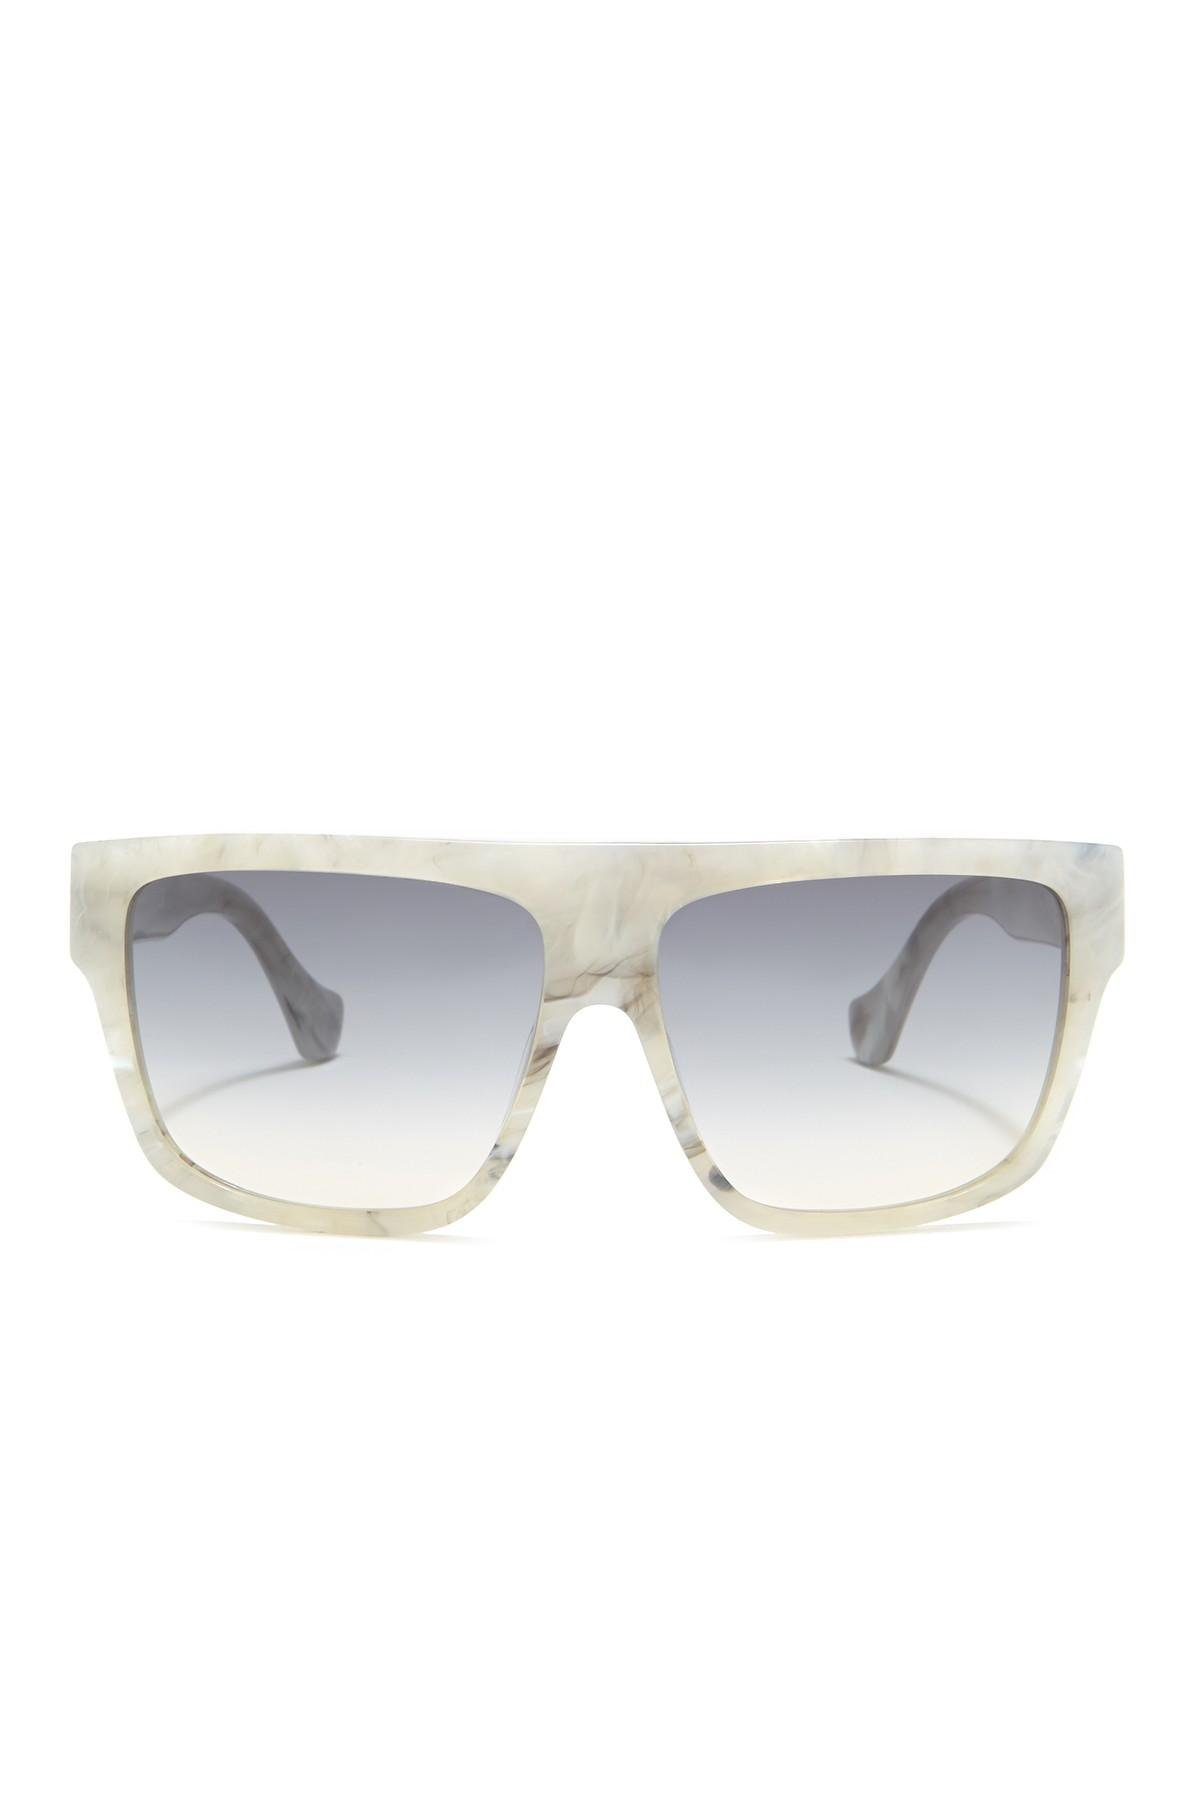 balenciaga marble sunglasses